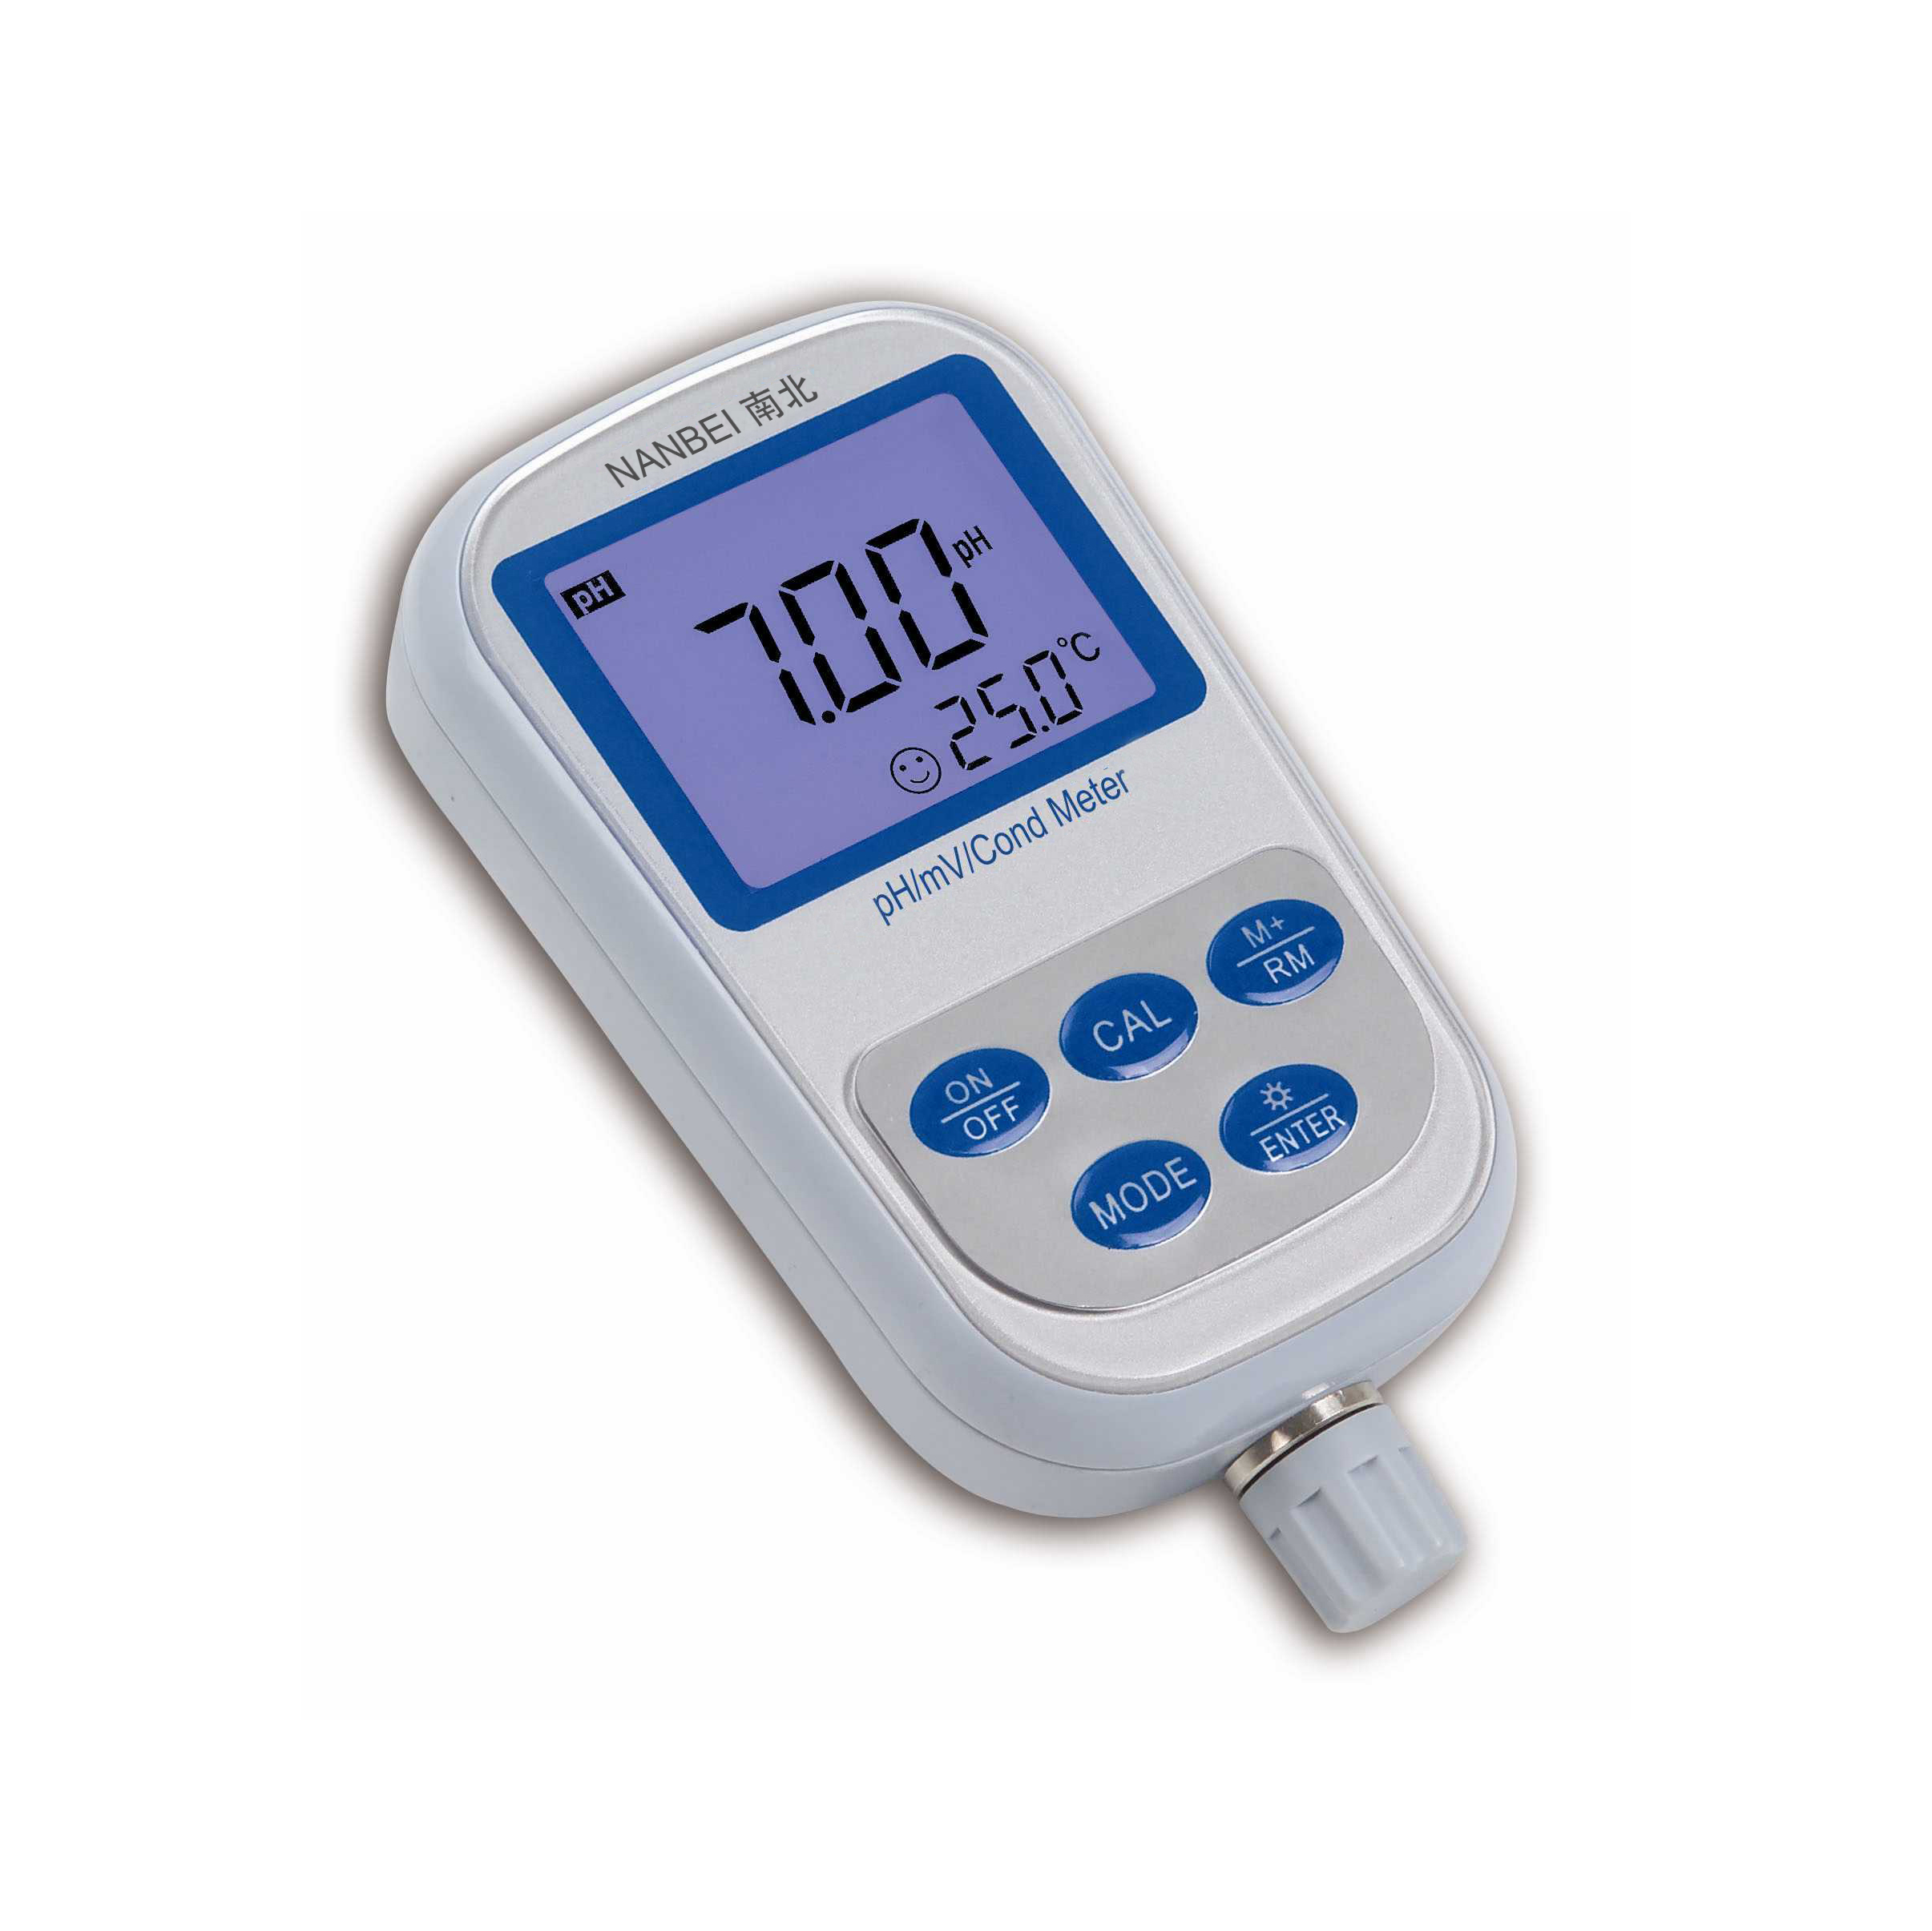 SX726 Portable Conductivity/Dissolved Oxygen Meter